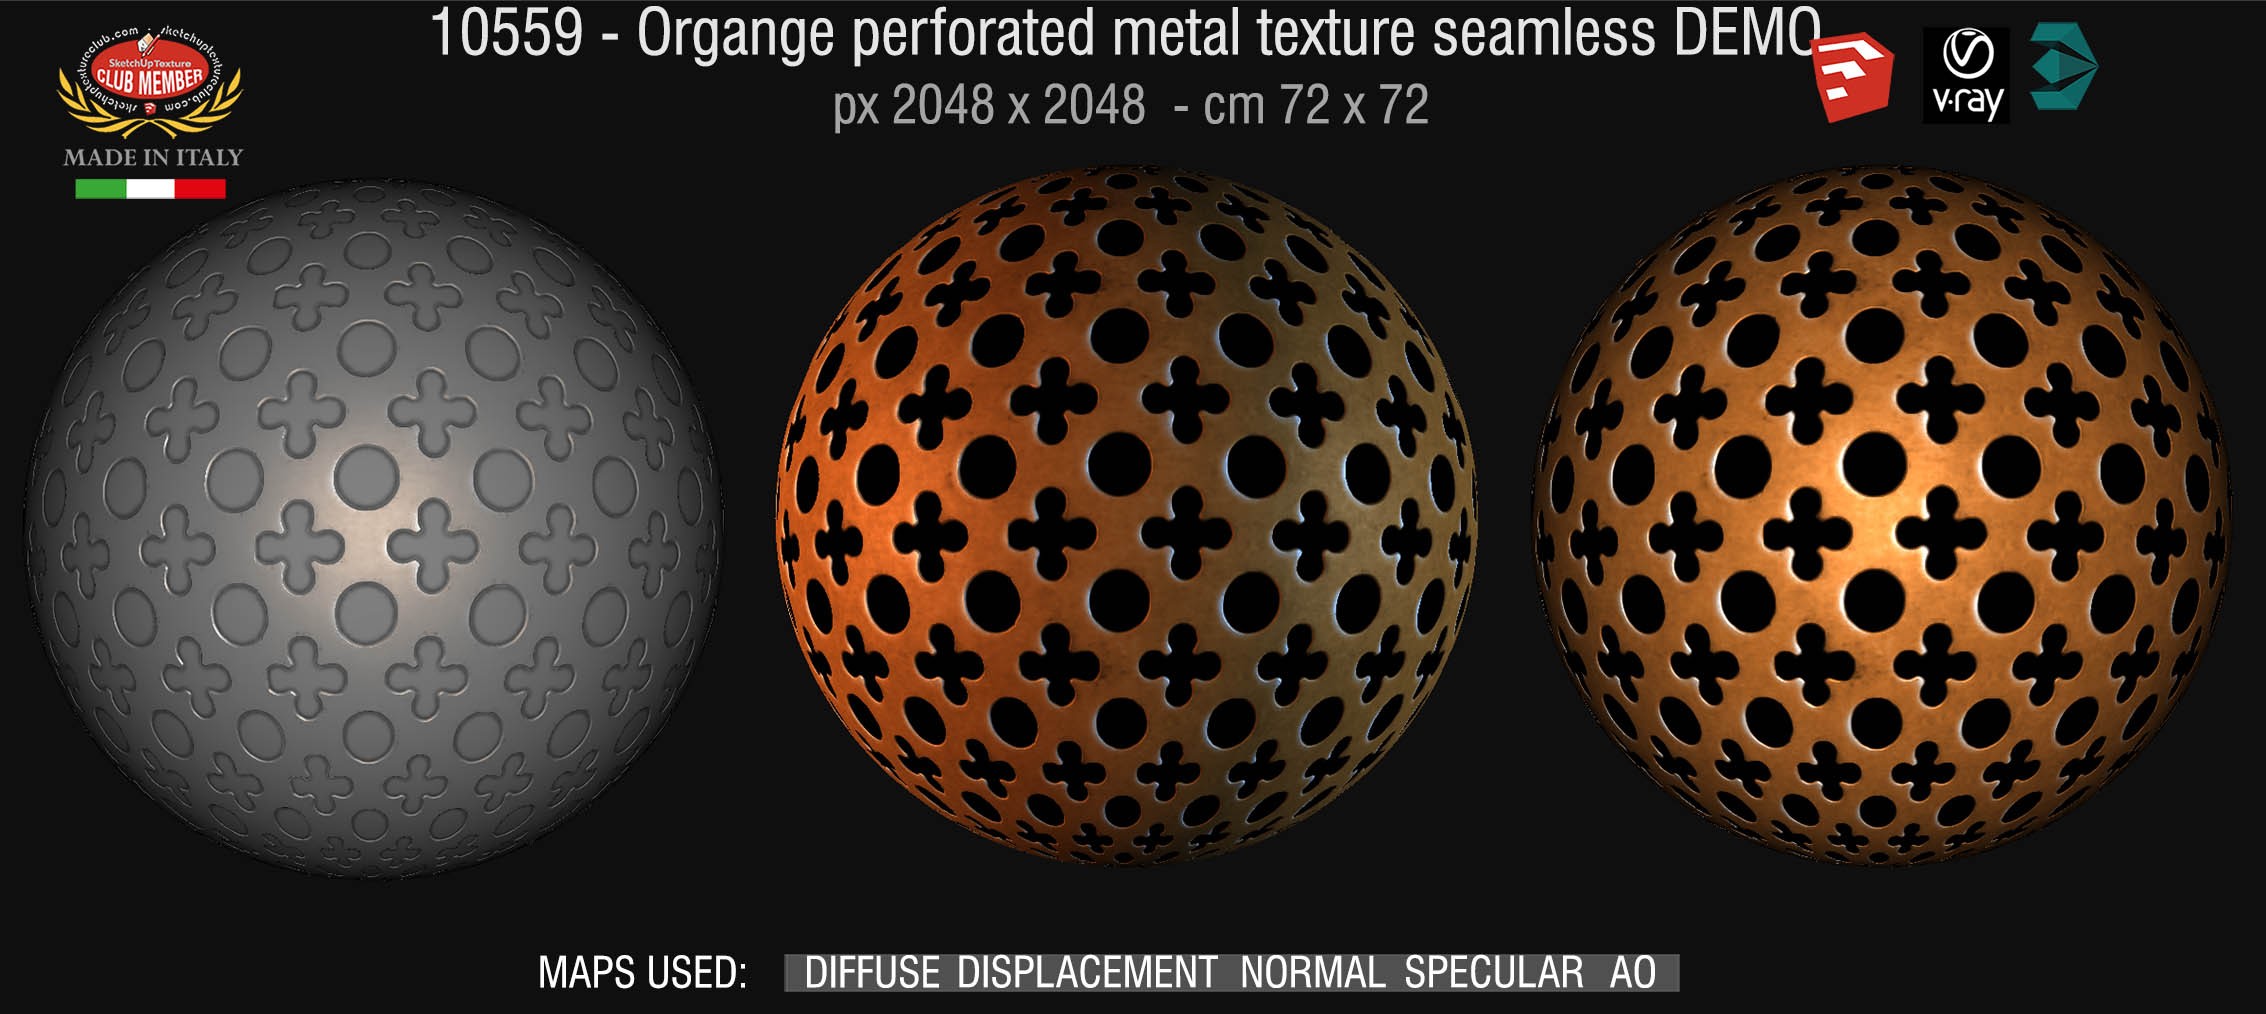 10559 HR Orange perforated metal texture seamless + maps DEMO